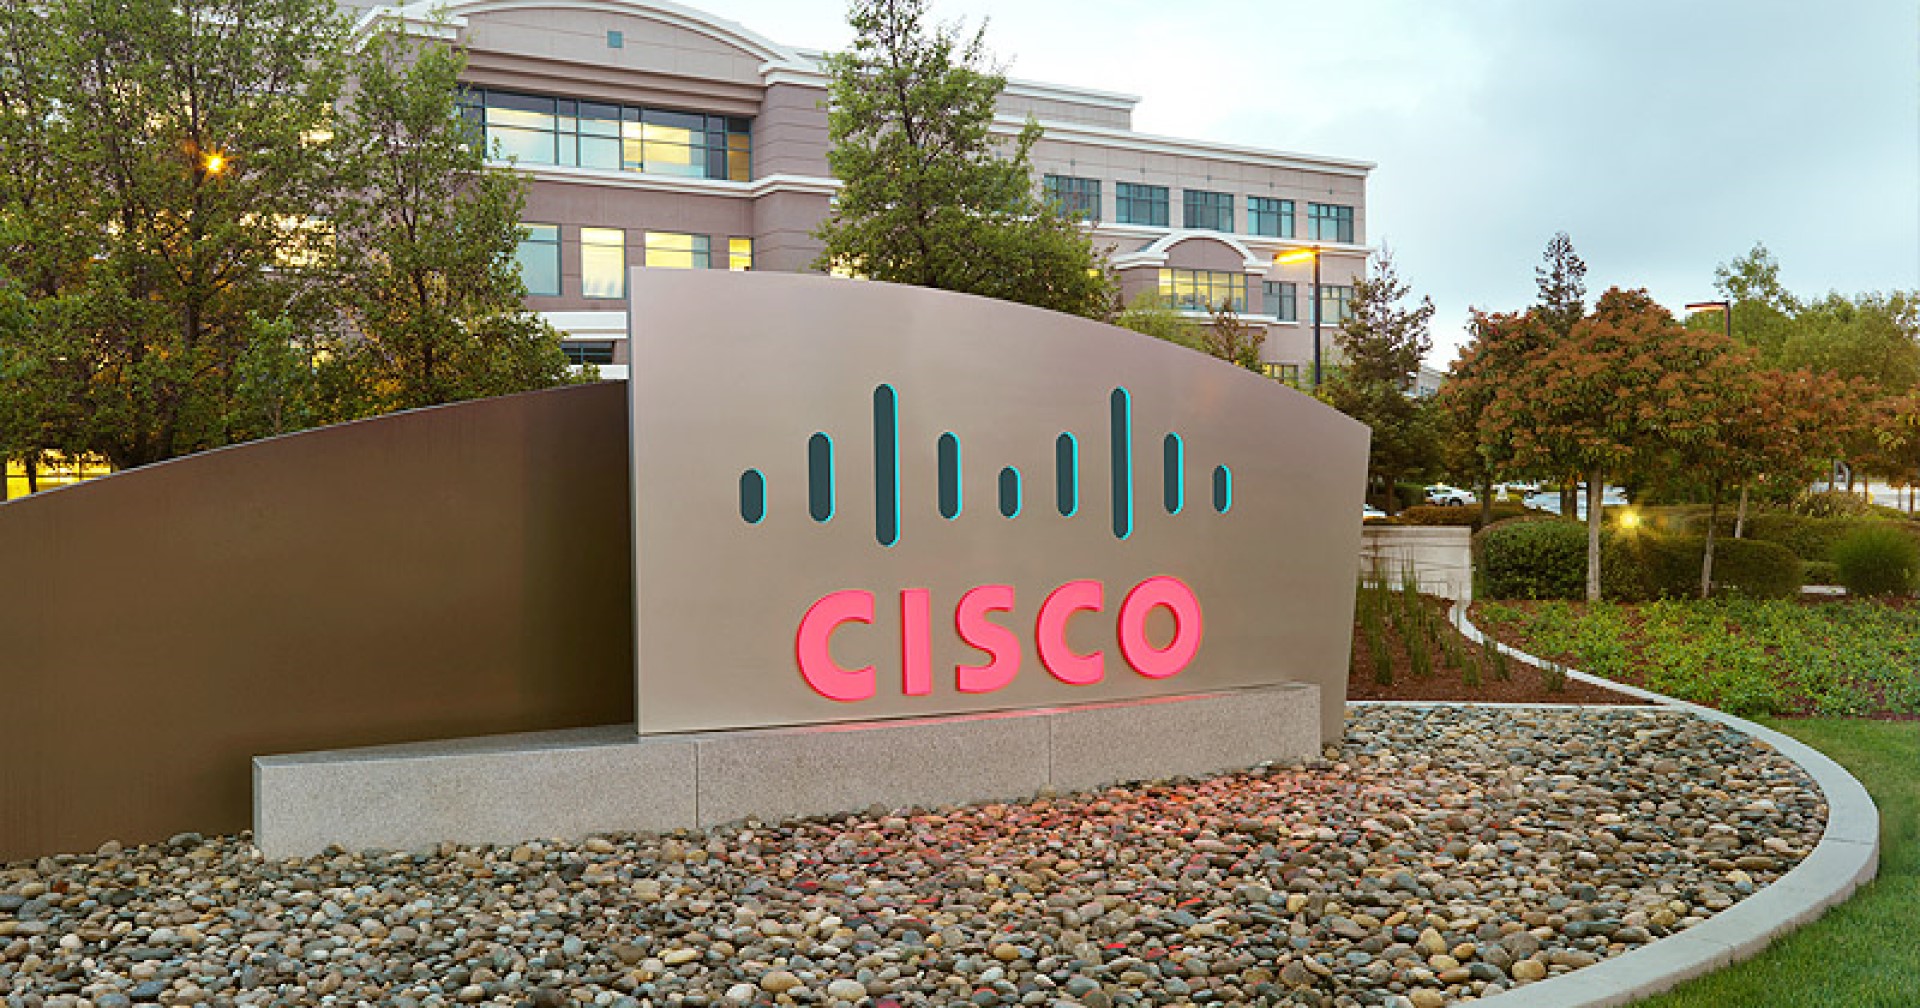 Cisco เปิดศูนย์วิจัยชิปเซมิคอนดักเตอร์ในสเปน มุ่งส่งเสริมอุตสาหกรรมชิปของยุโรป